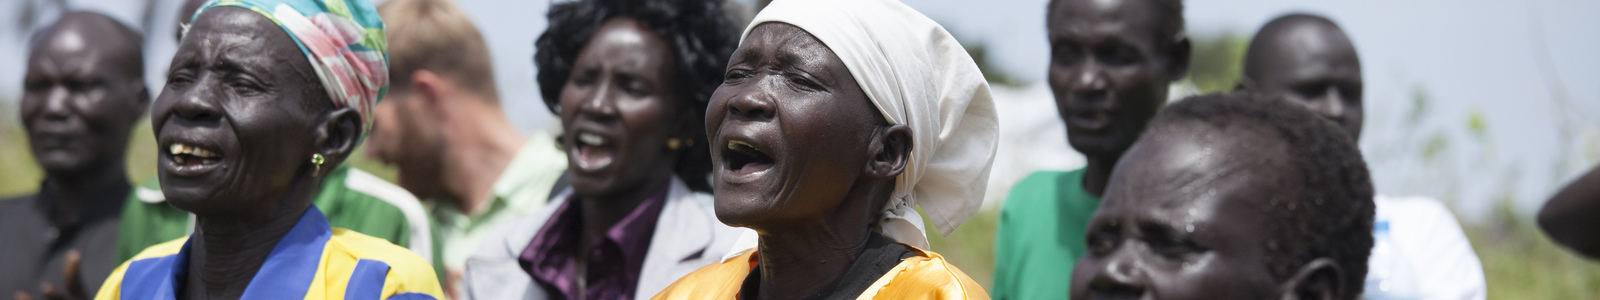 Panwel, South Sudan November 2, 2013: Unidentified Worshippers S